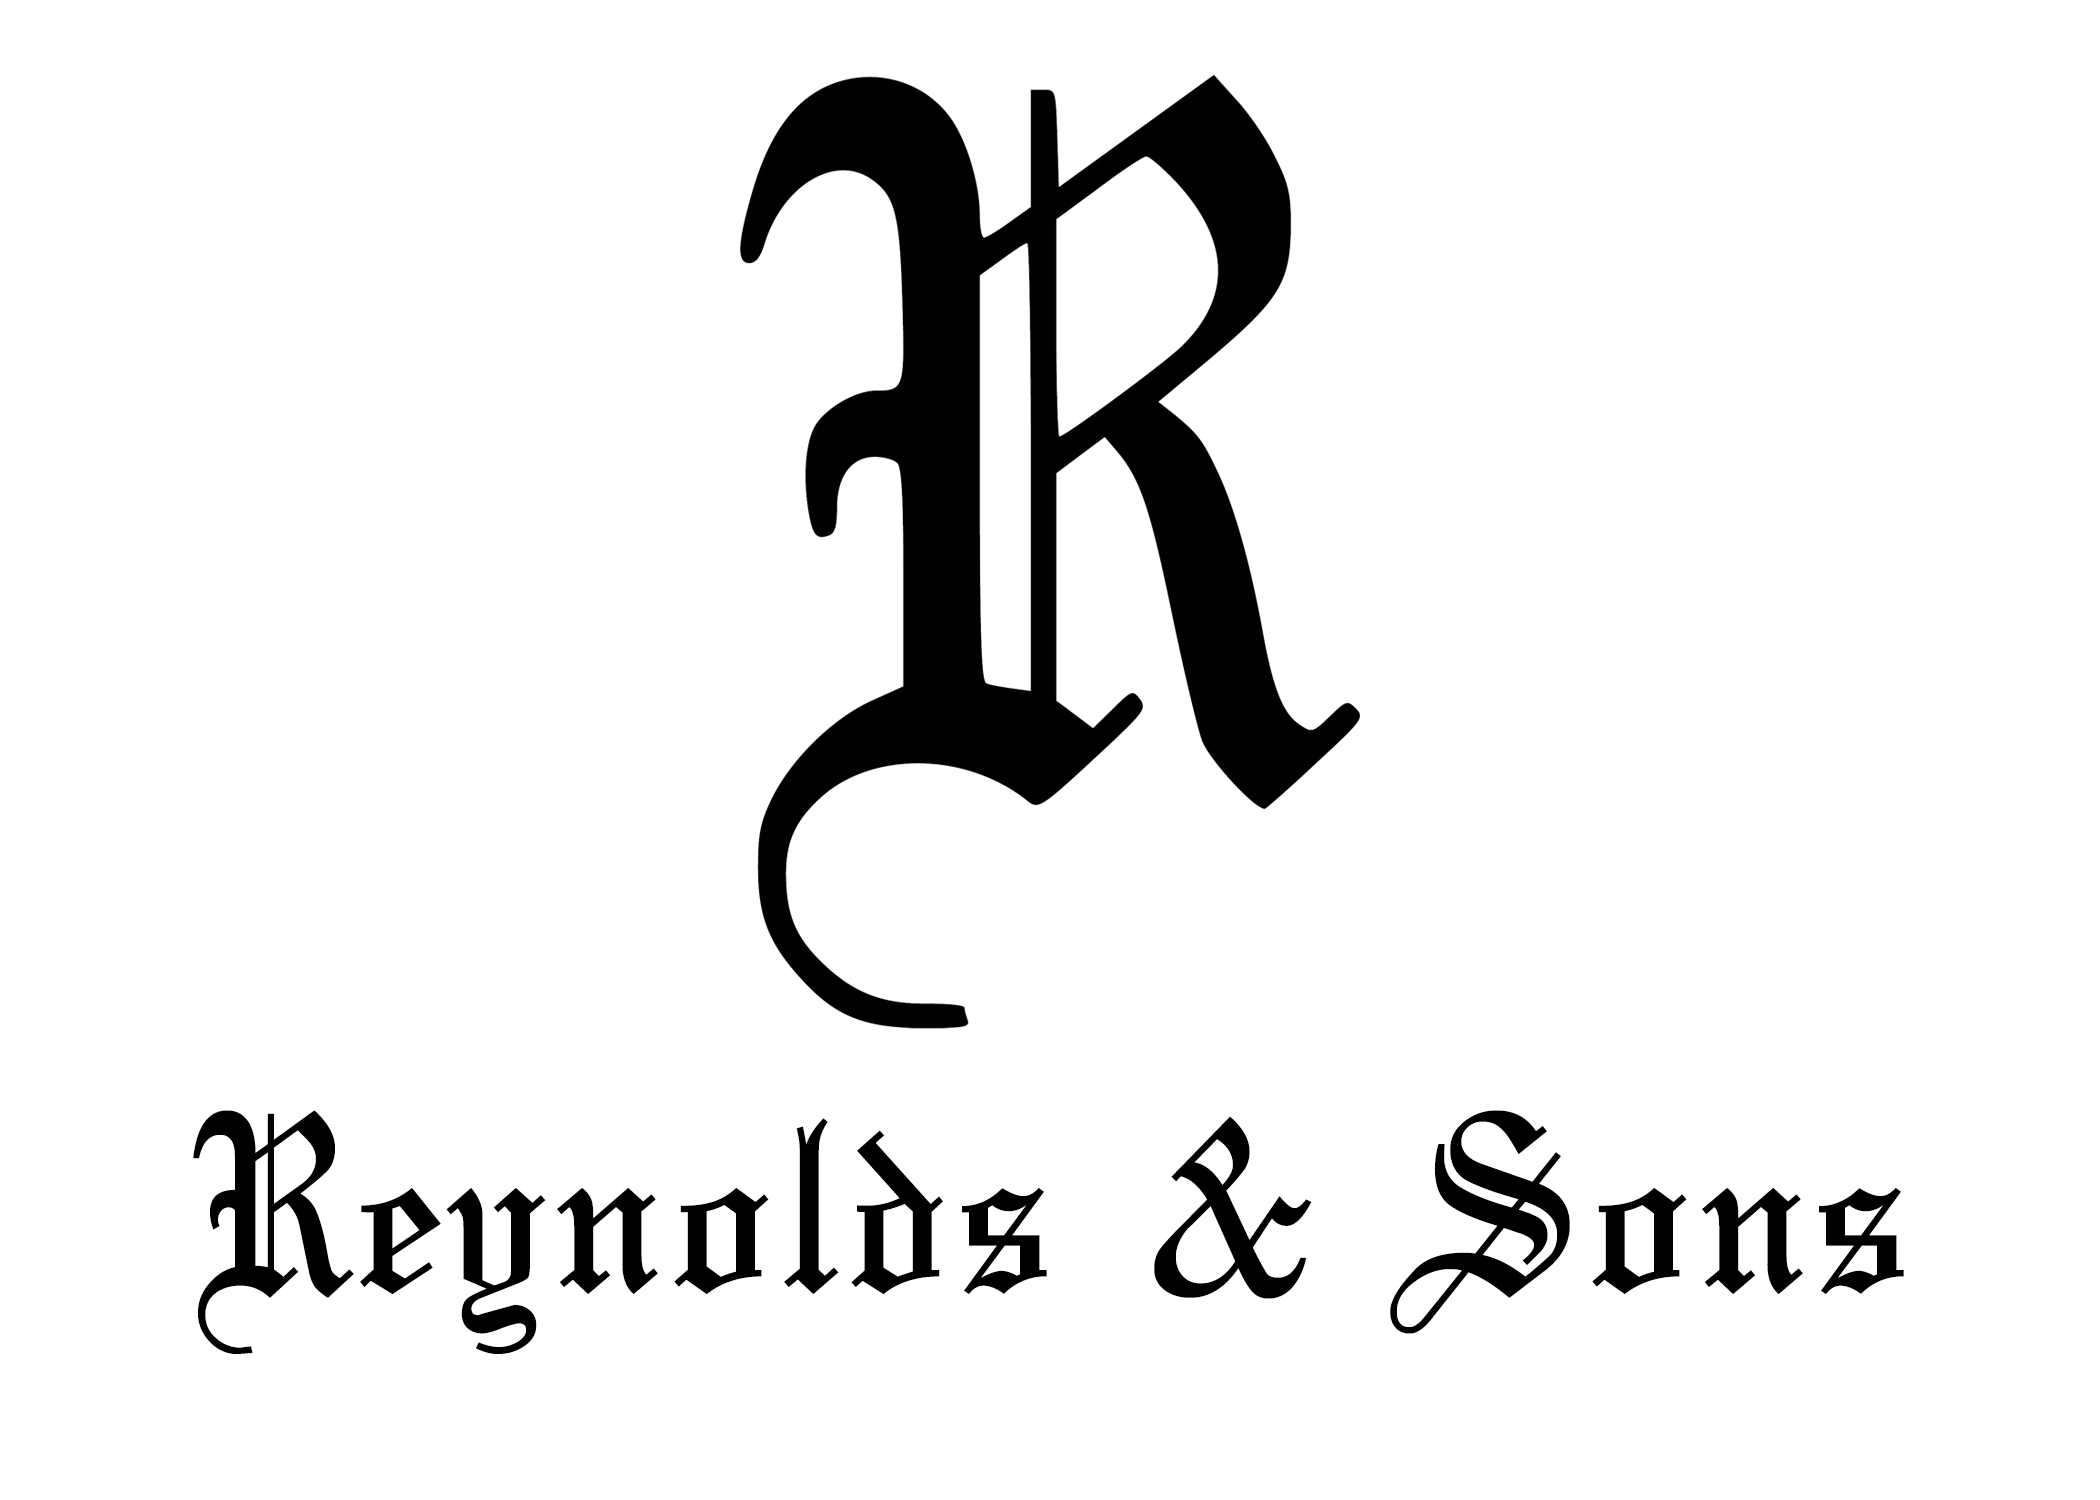 Reynolds & Sons | 12 Monroe Center St NE, Grand Rapids, MI